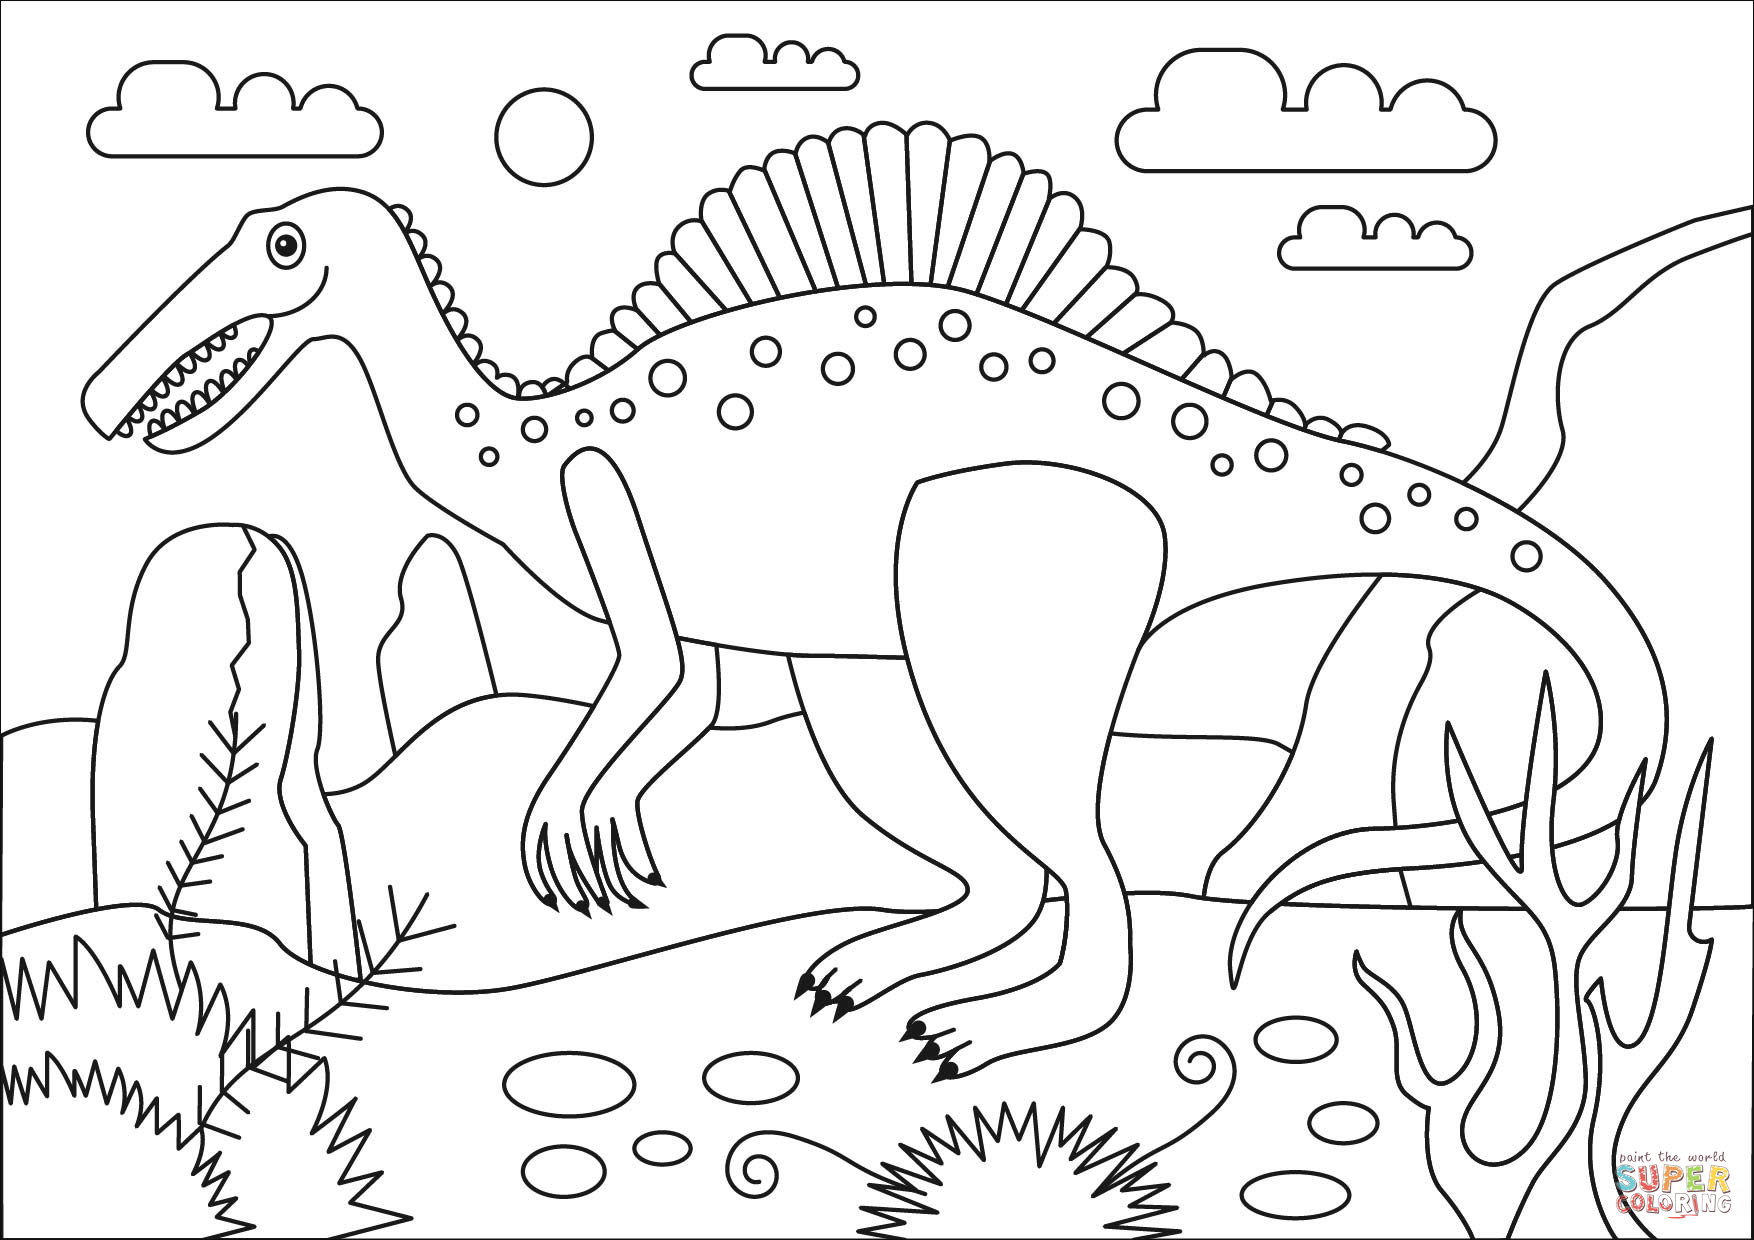 Spinosaurus dinosaur coloring page free printable coloring pages